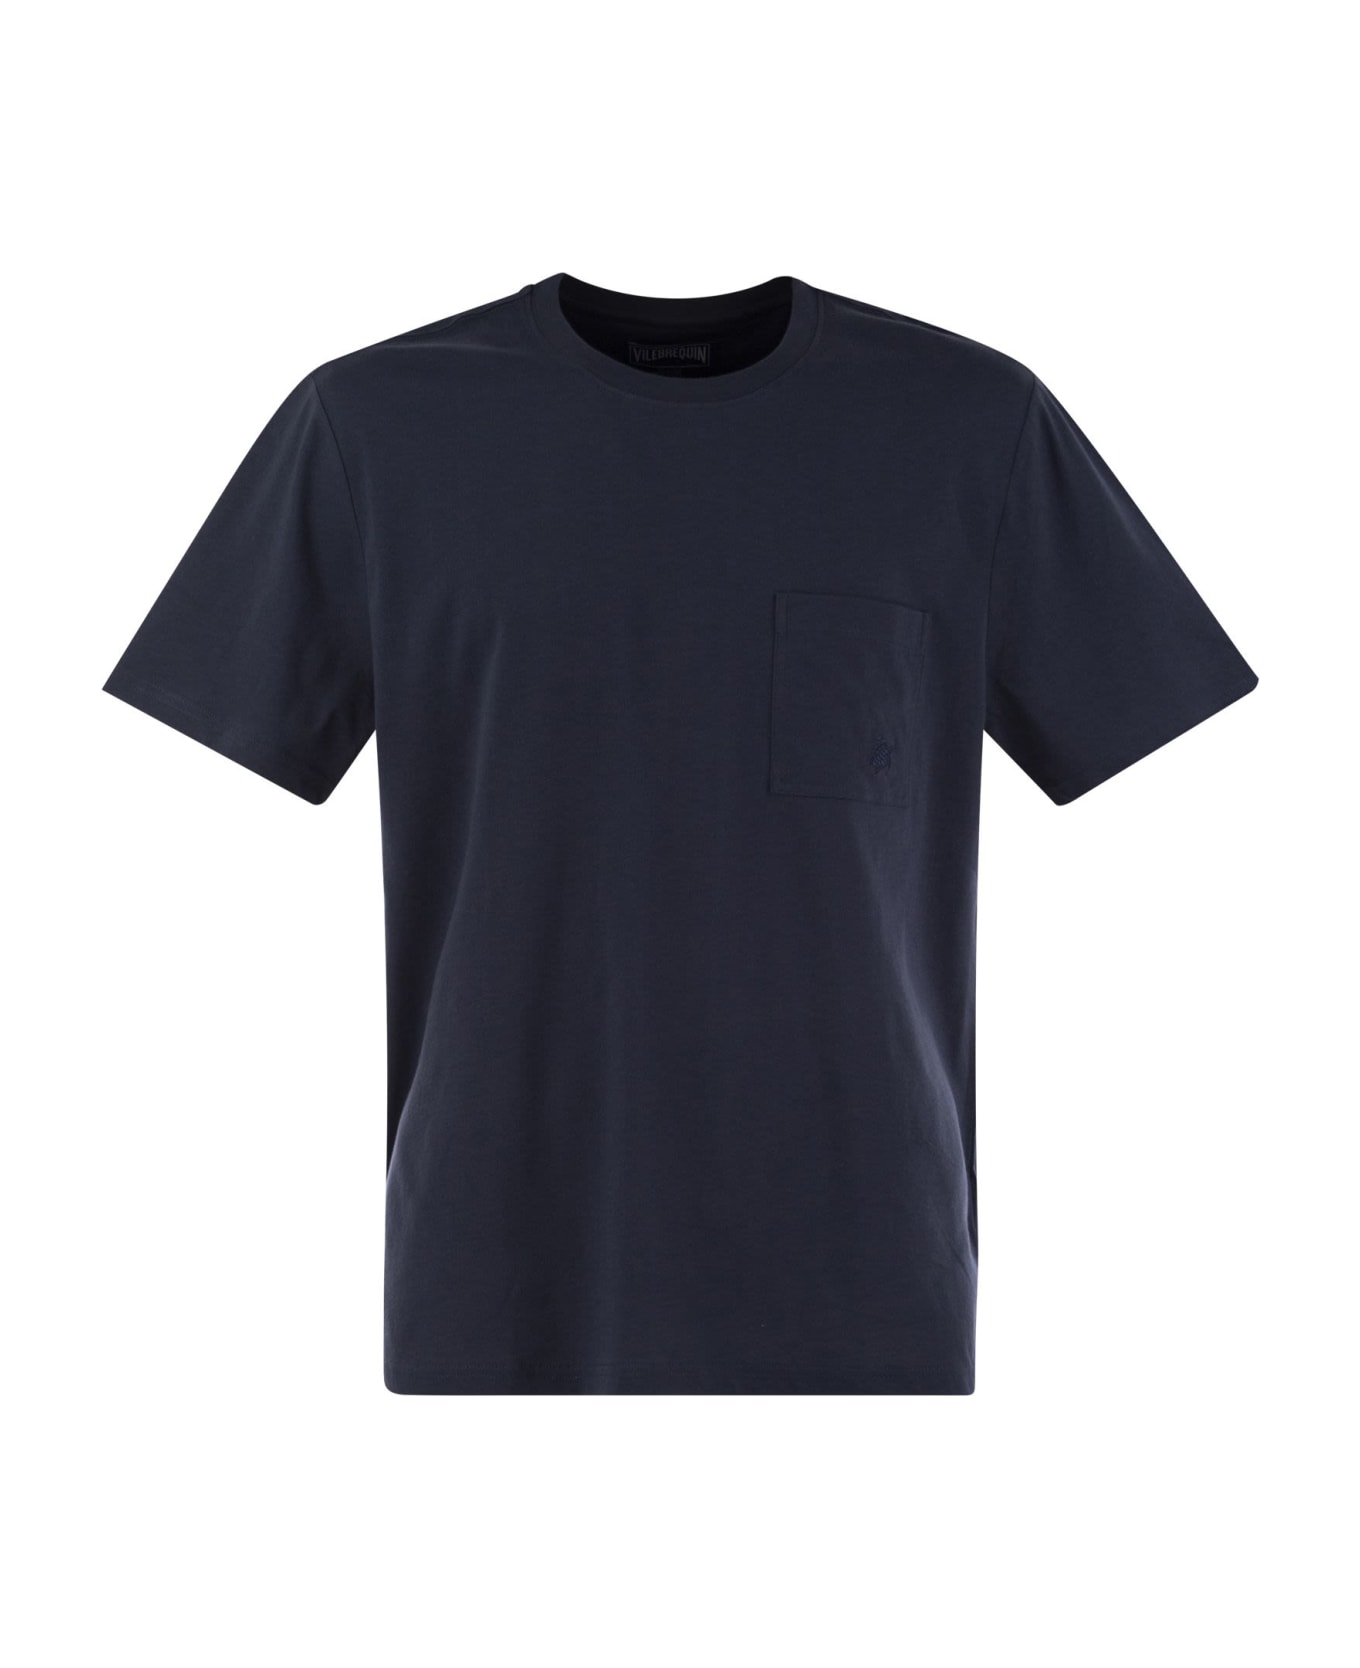 Vilebrequin Cotton T-shirt With Pocket - Marine Blue